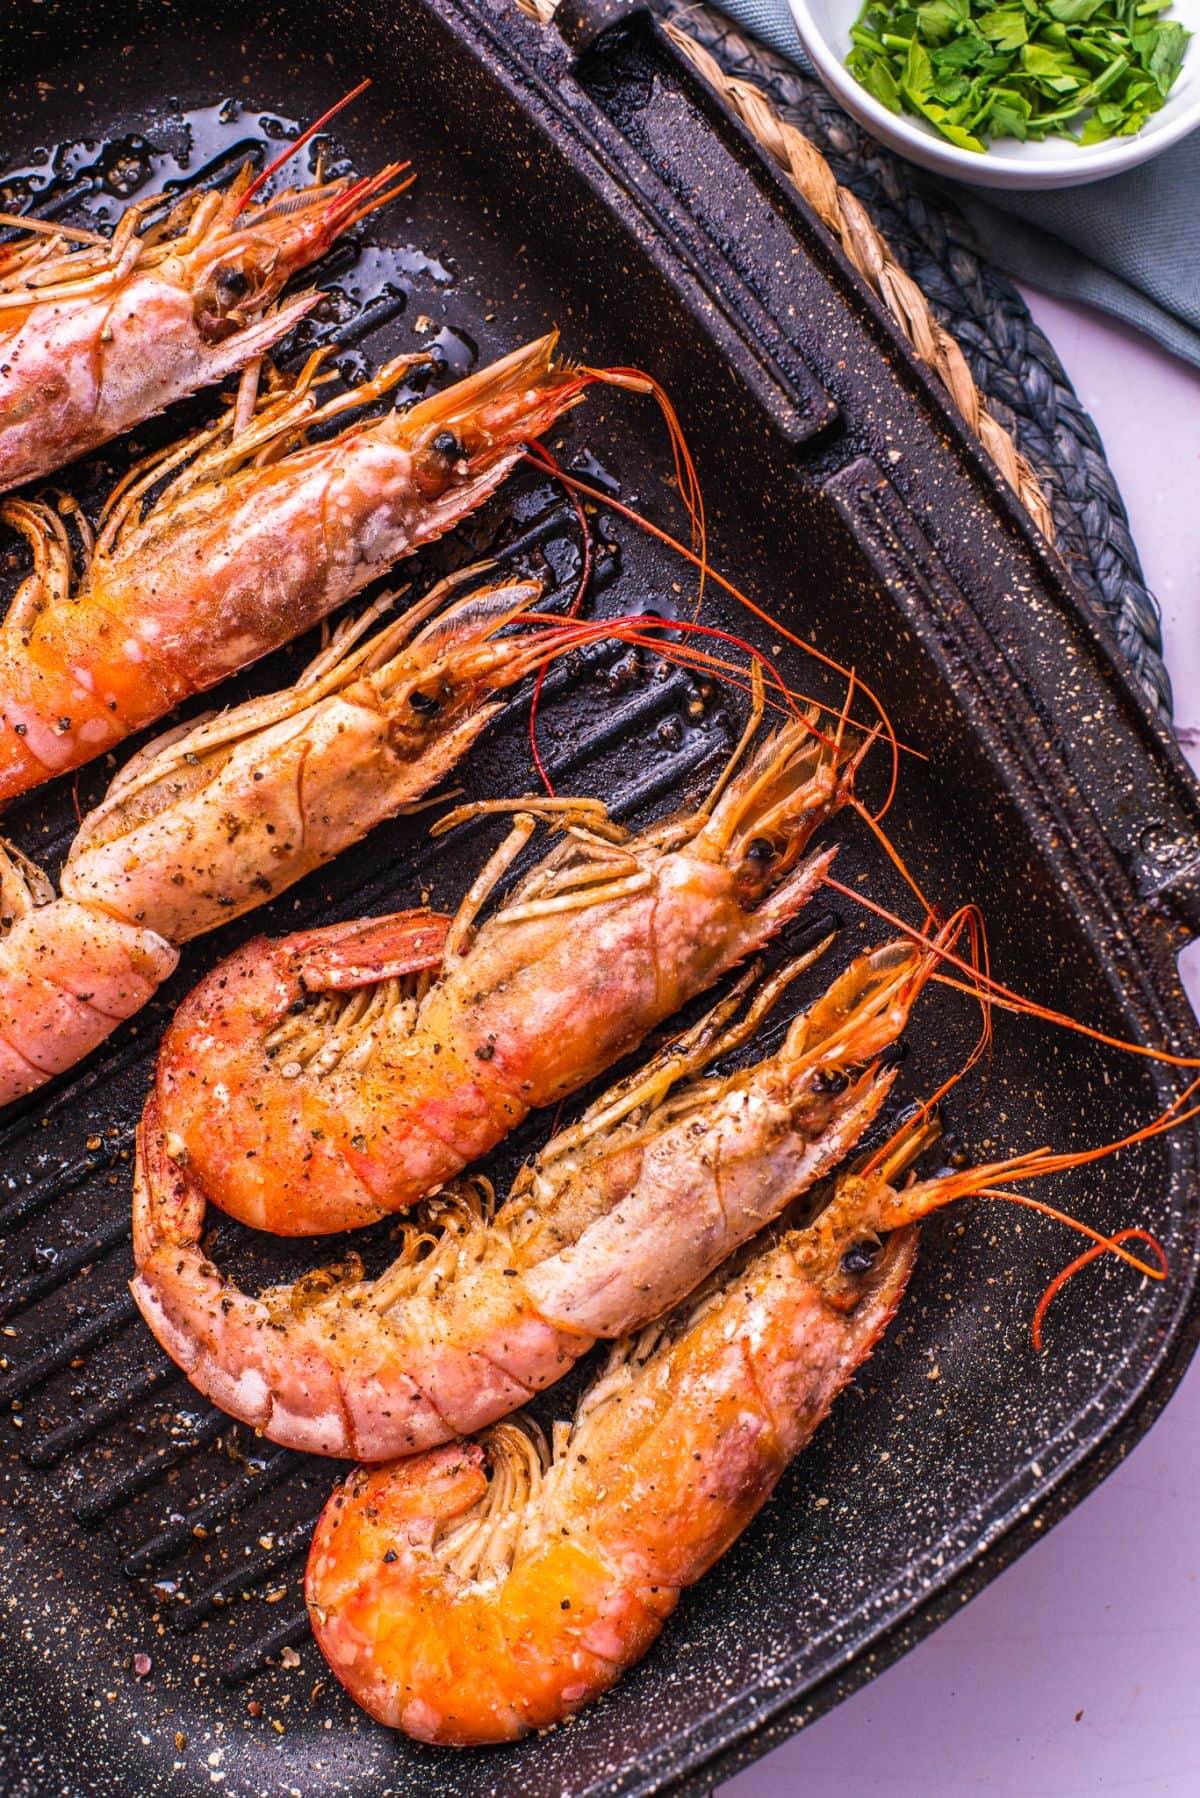 How to cook shrimp 3